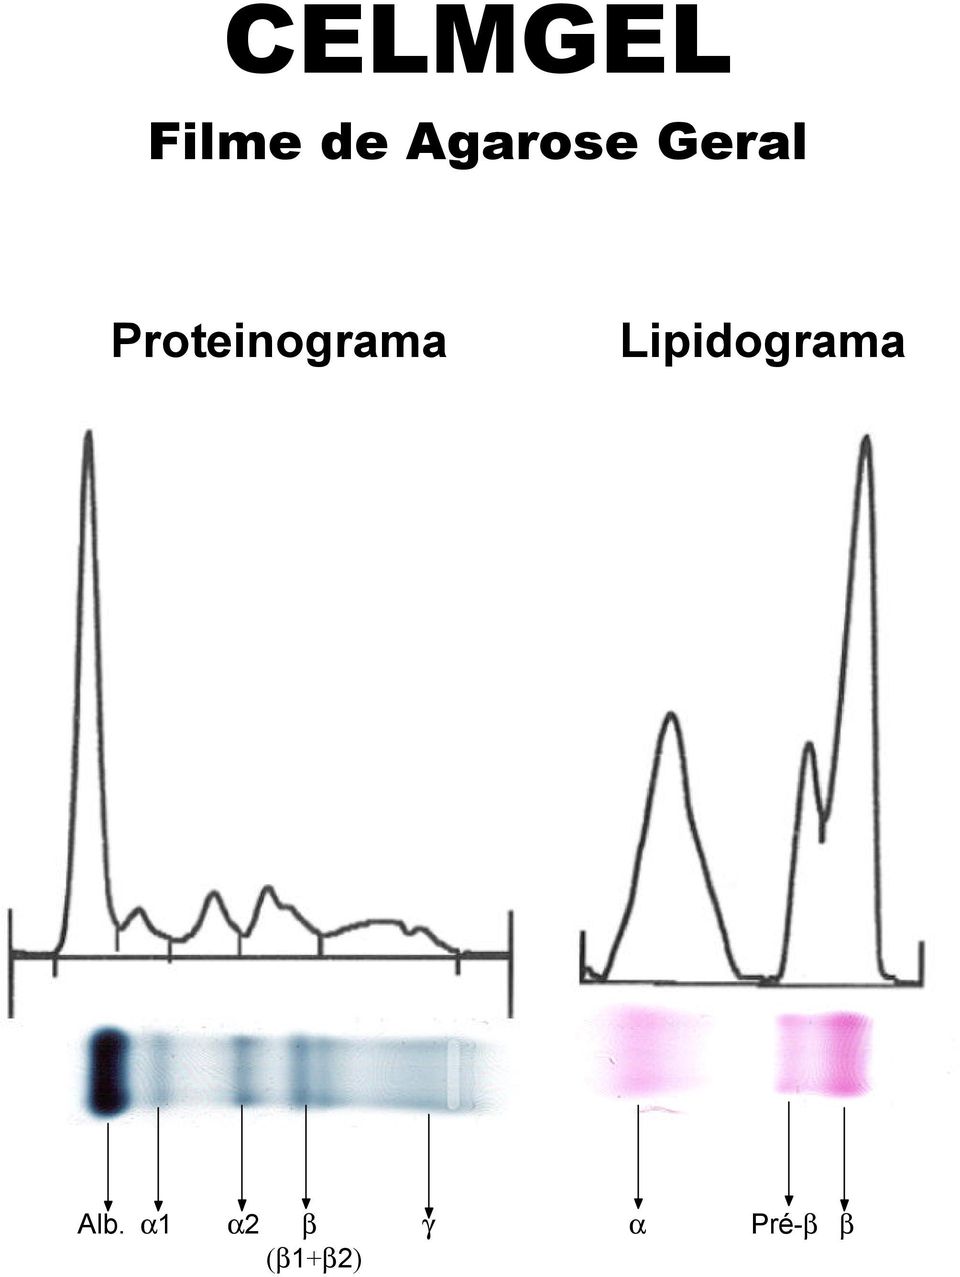 Proteinograma